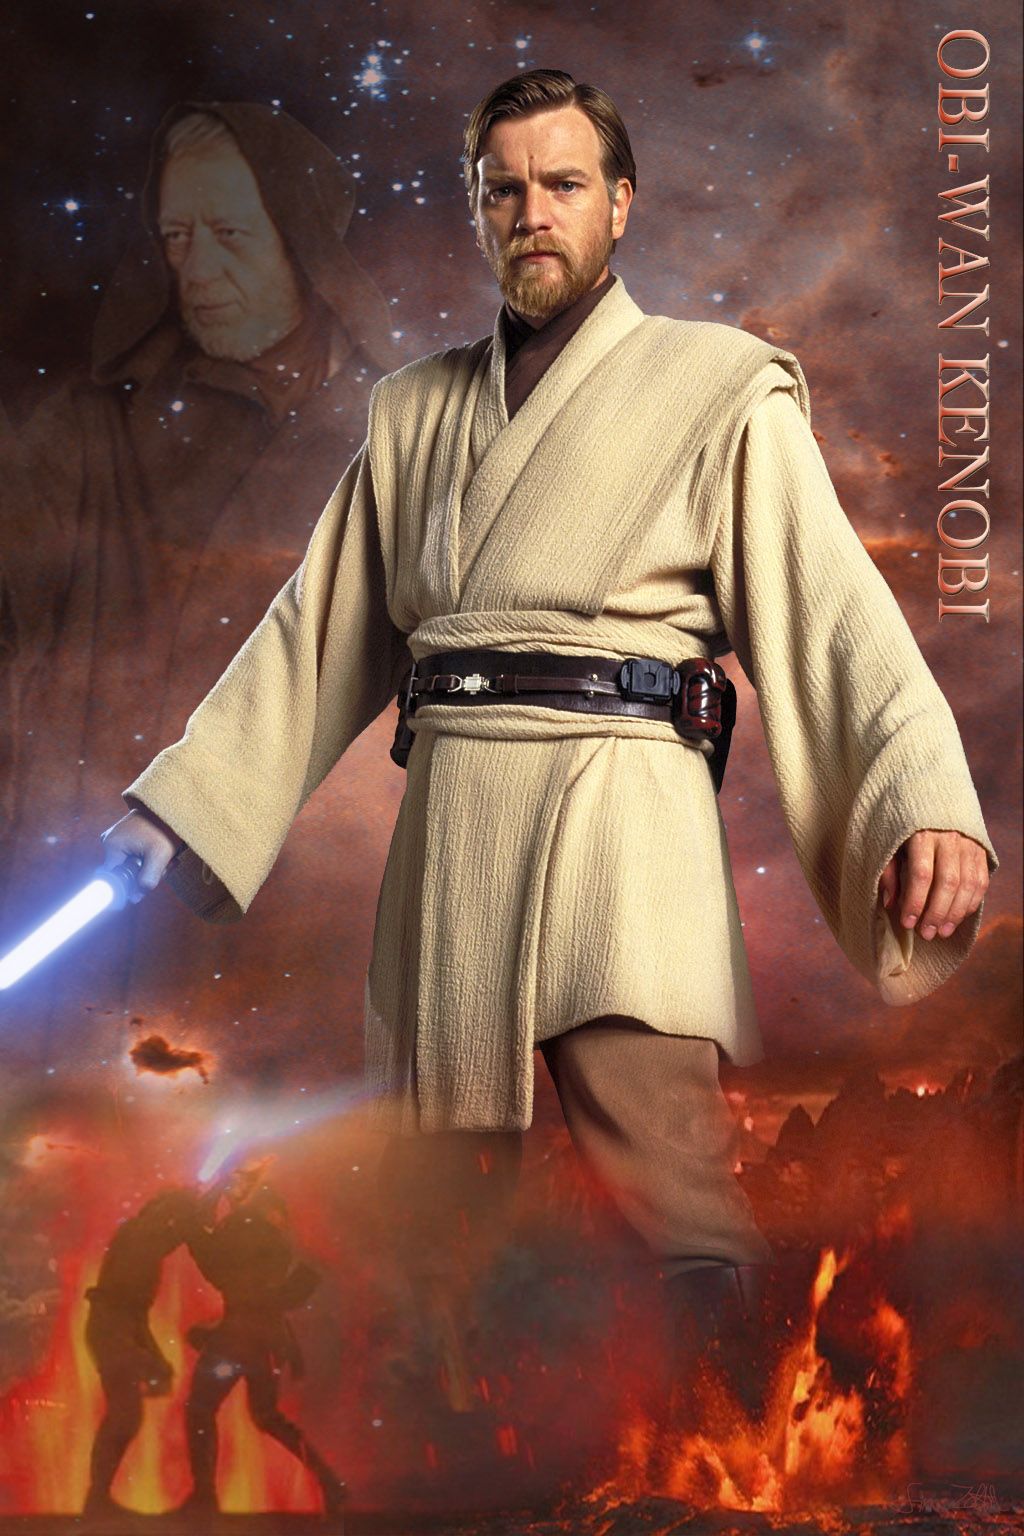 Wallpaper ID 528173  Luke Skywalker ObiWan Kenobi Star Wars Yoda 4K  Darth Vader Emperor Palpatine Sith multiple display Jedi free download